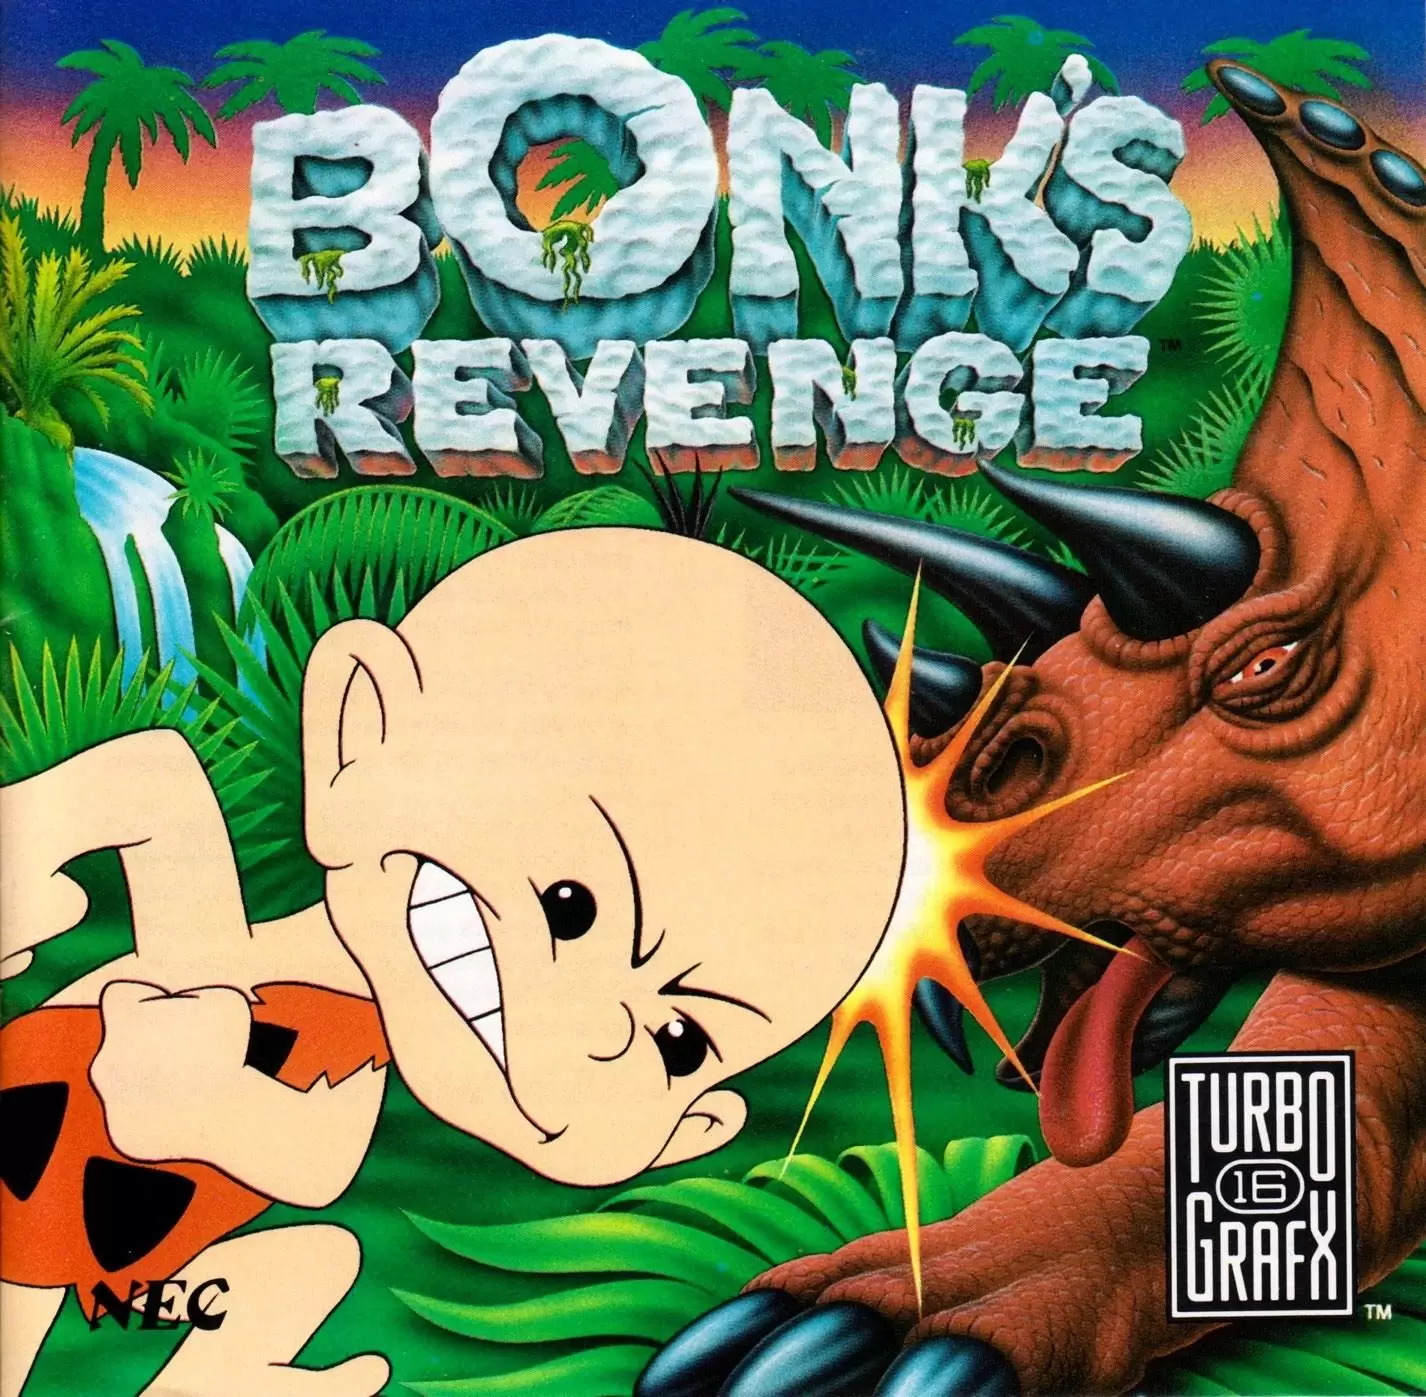 Turbo Grafx 16 (PC Engine) - Bonk\'s Revenge